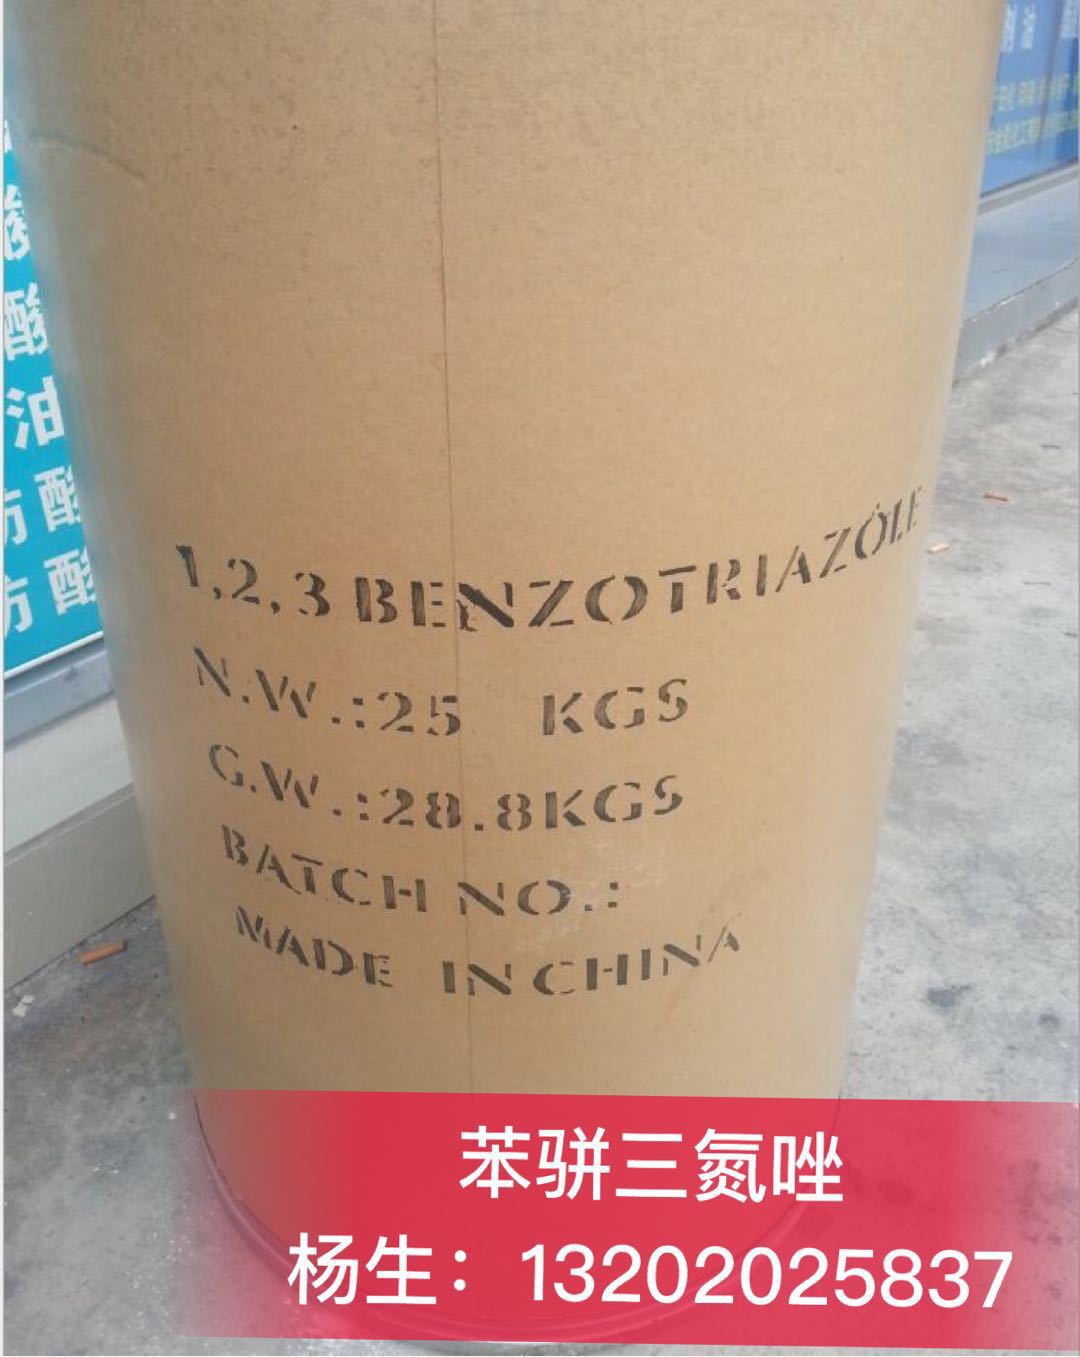 Benzo triazole three BTA Benzo three azole Nanjing Corrosion inhibitor